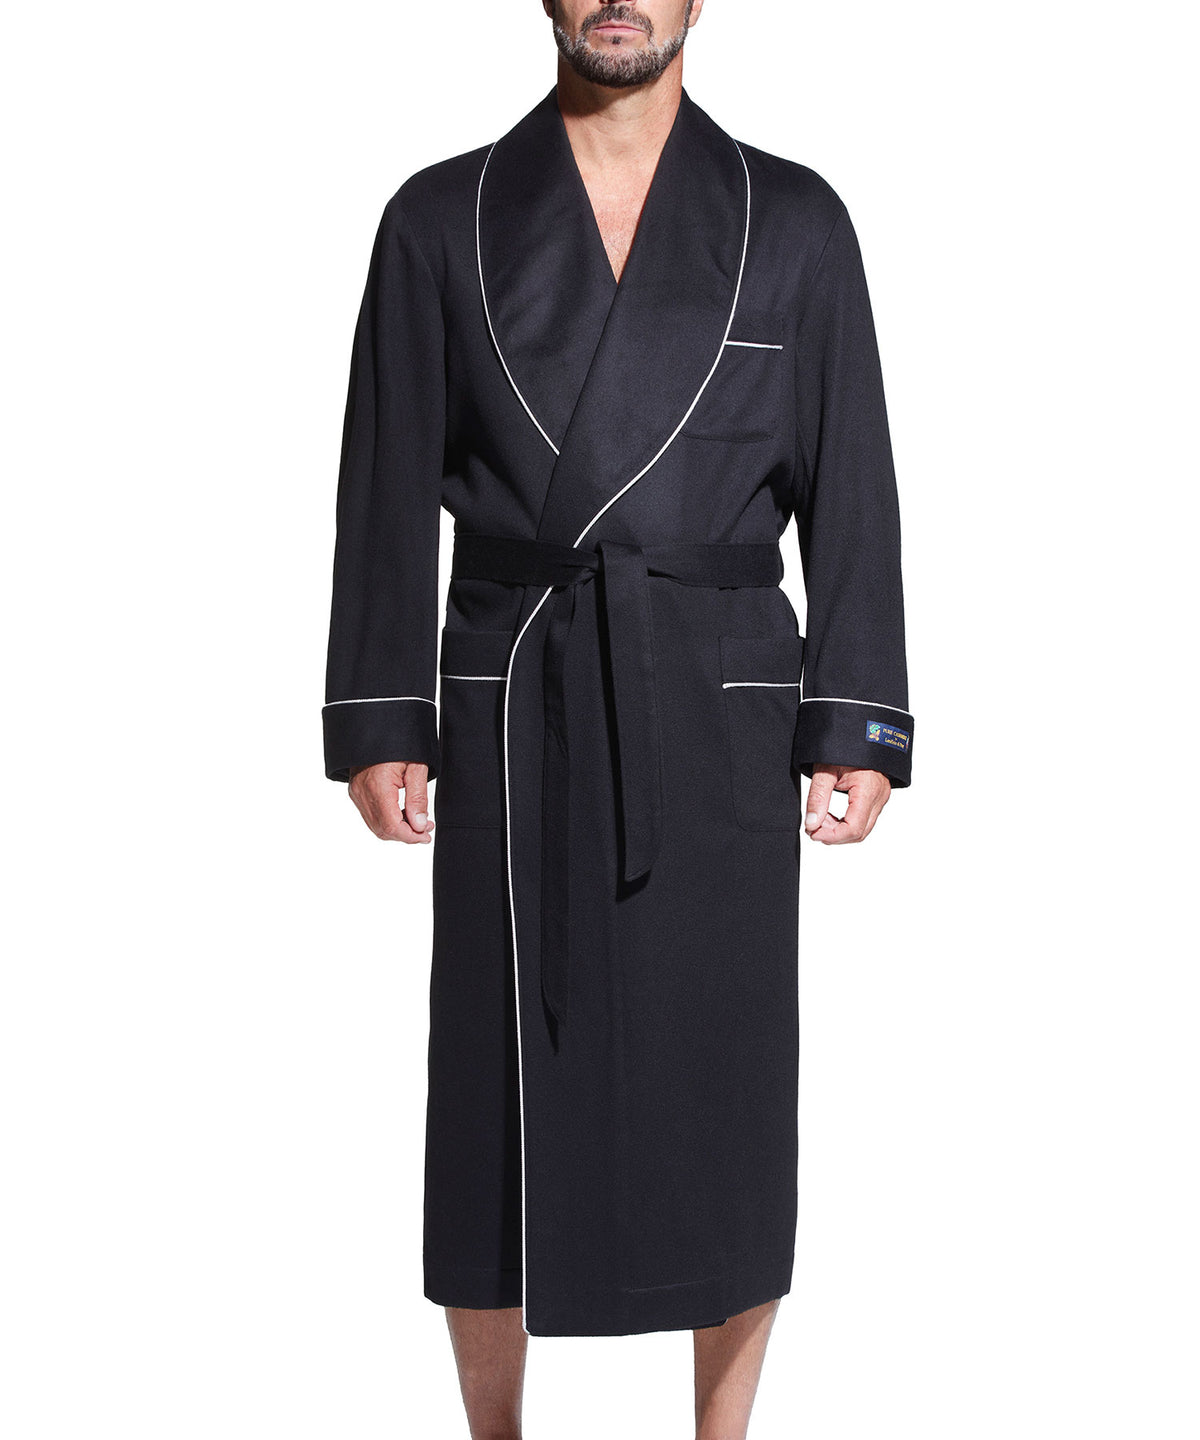 Westport Black Made-to-Order Customizable Cashmere Shawl Robe